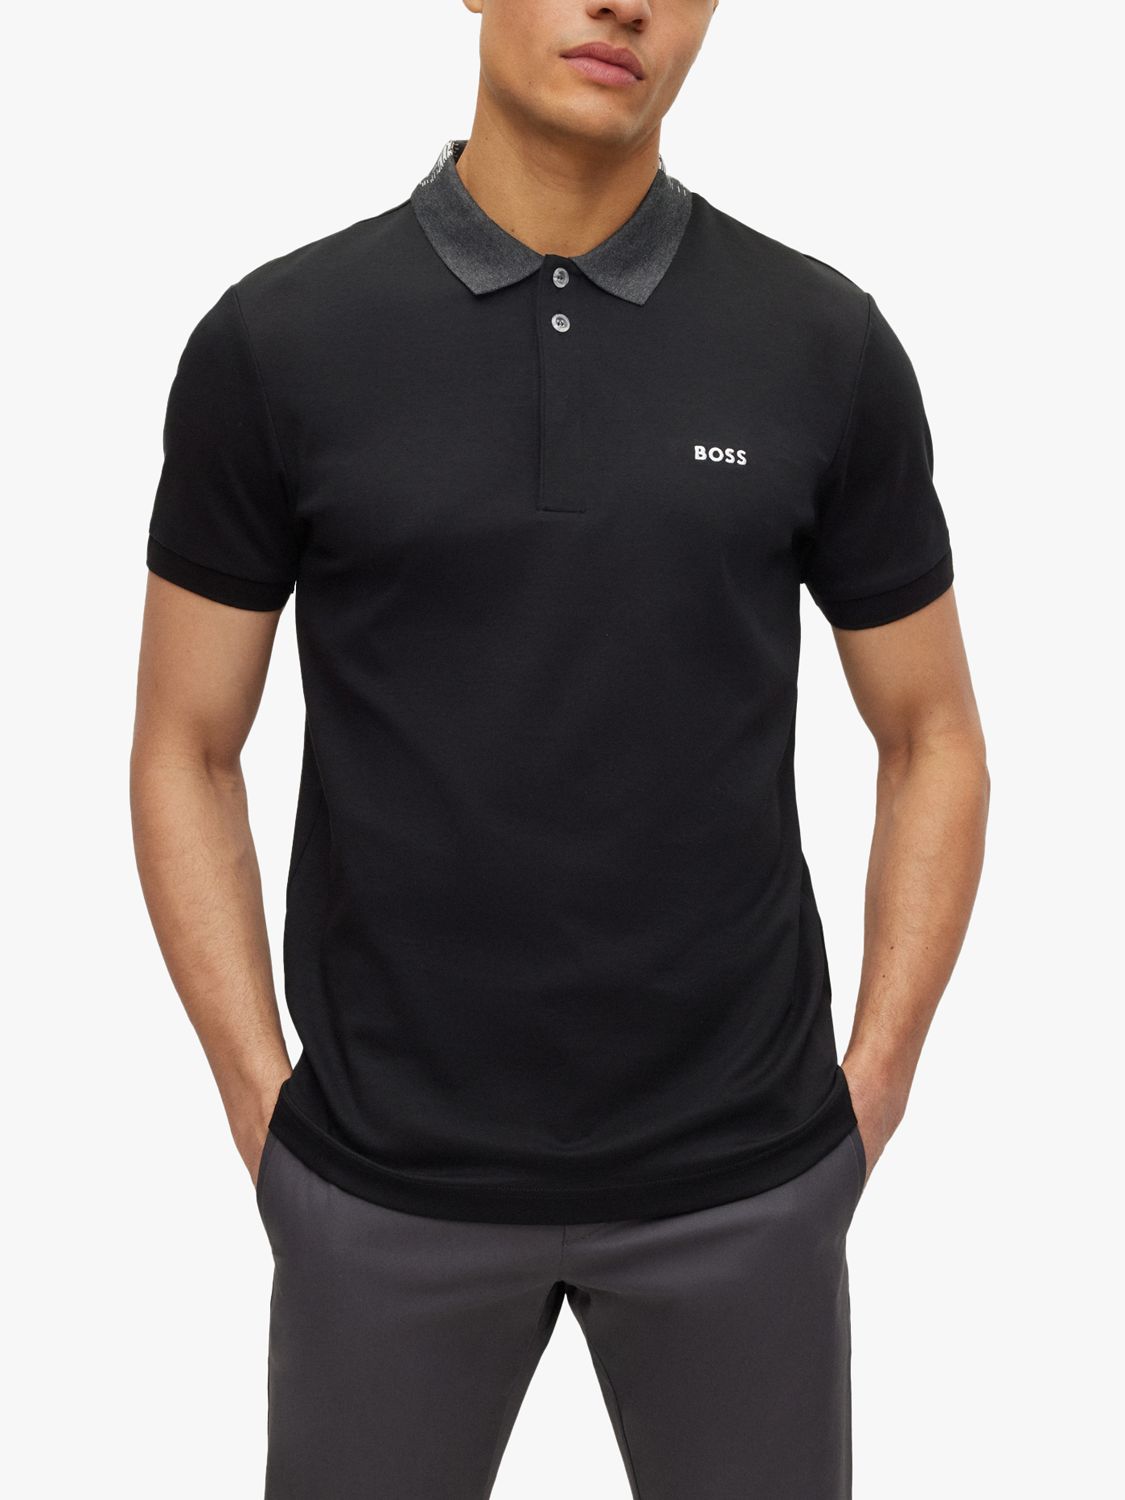 BOSS Paule 3D Jacquard Polo Shirt, Black at John & Partners